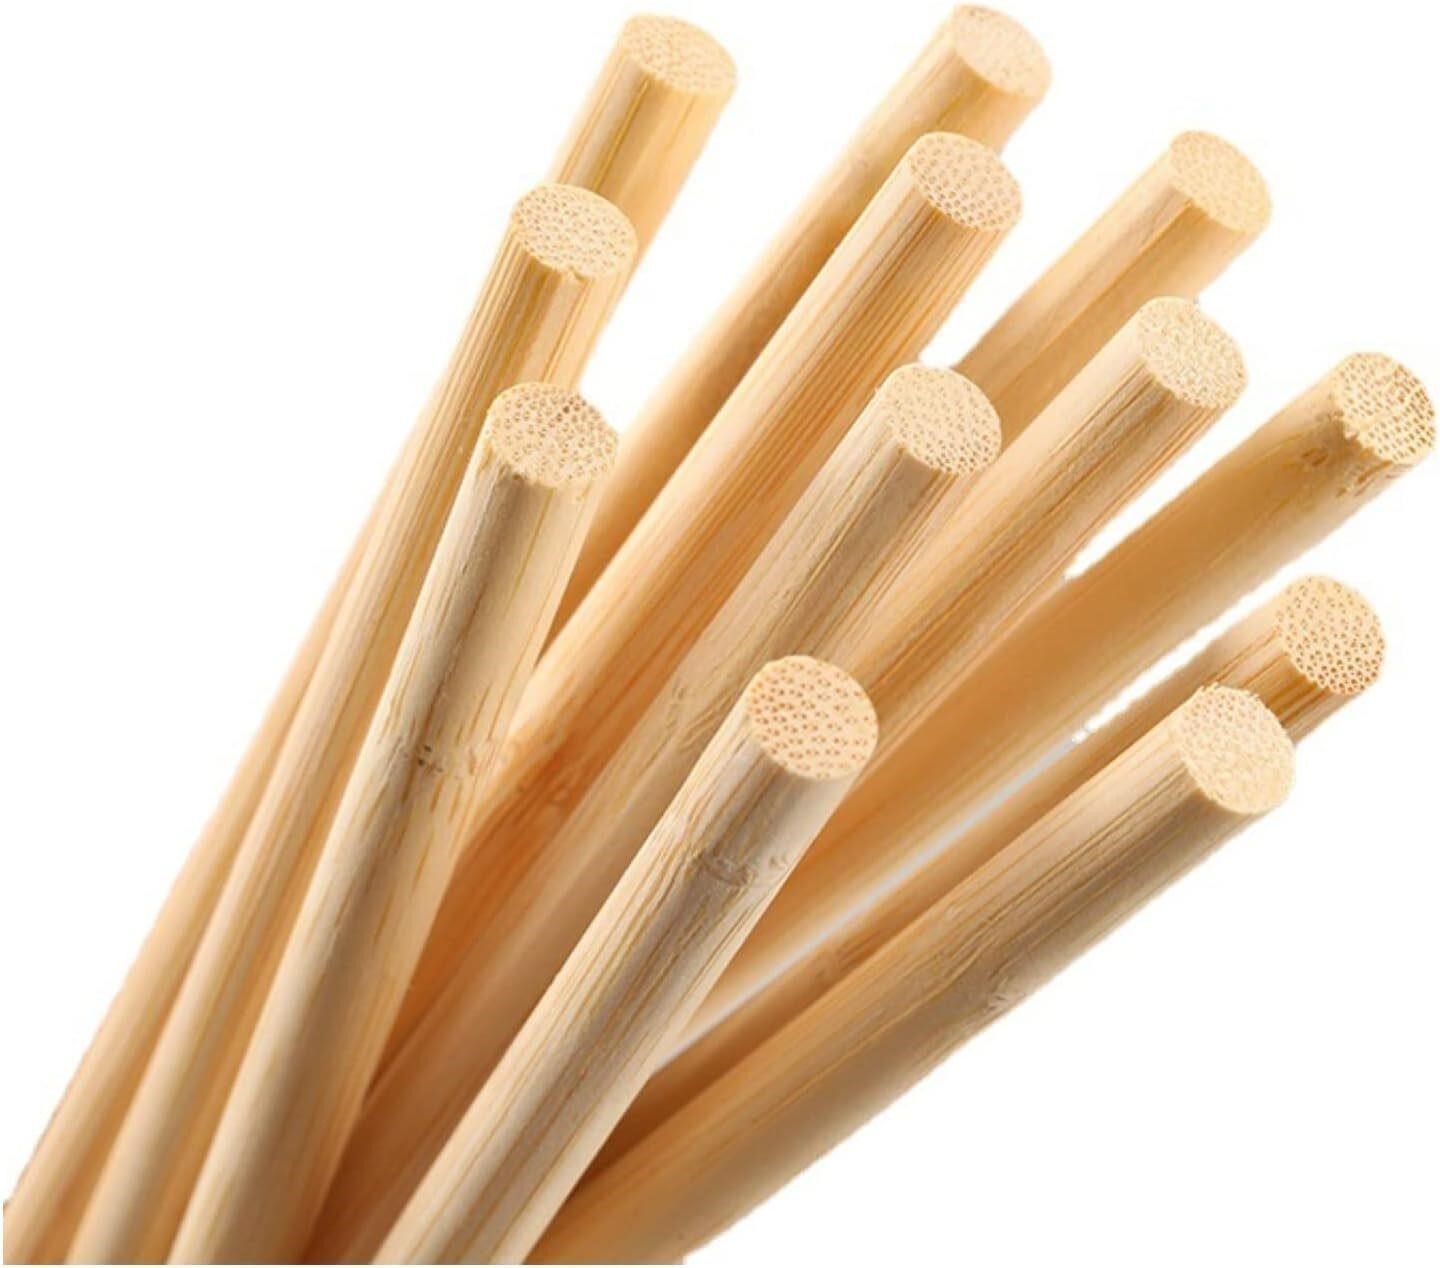 50PCS Dowel Rods - 1/2 x 48 Inch Bamboo